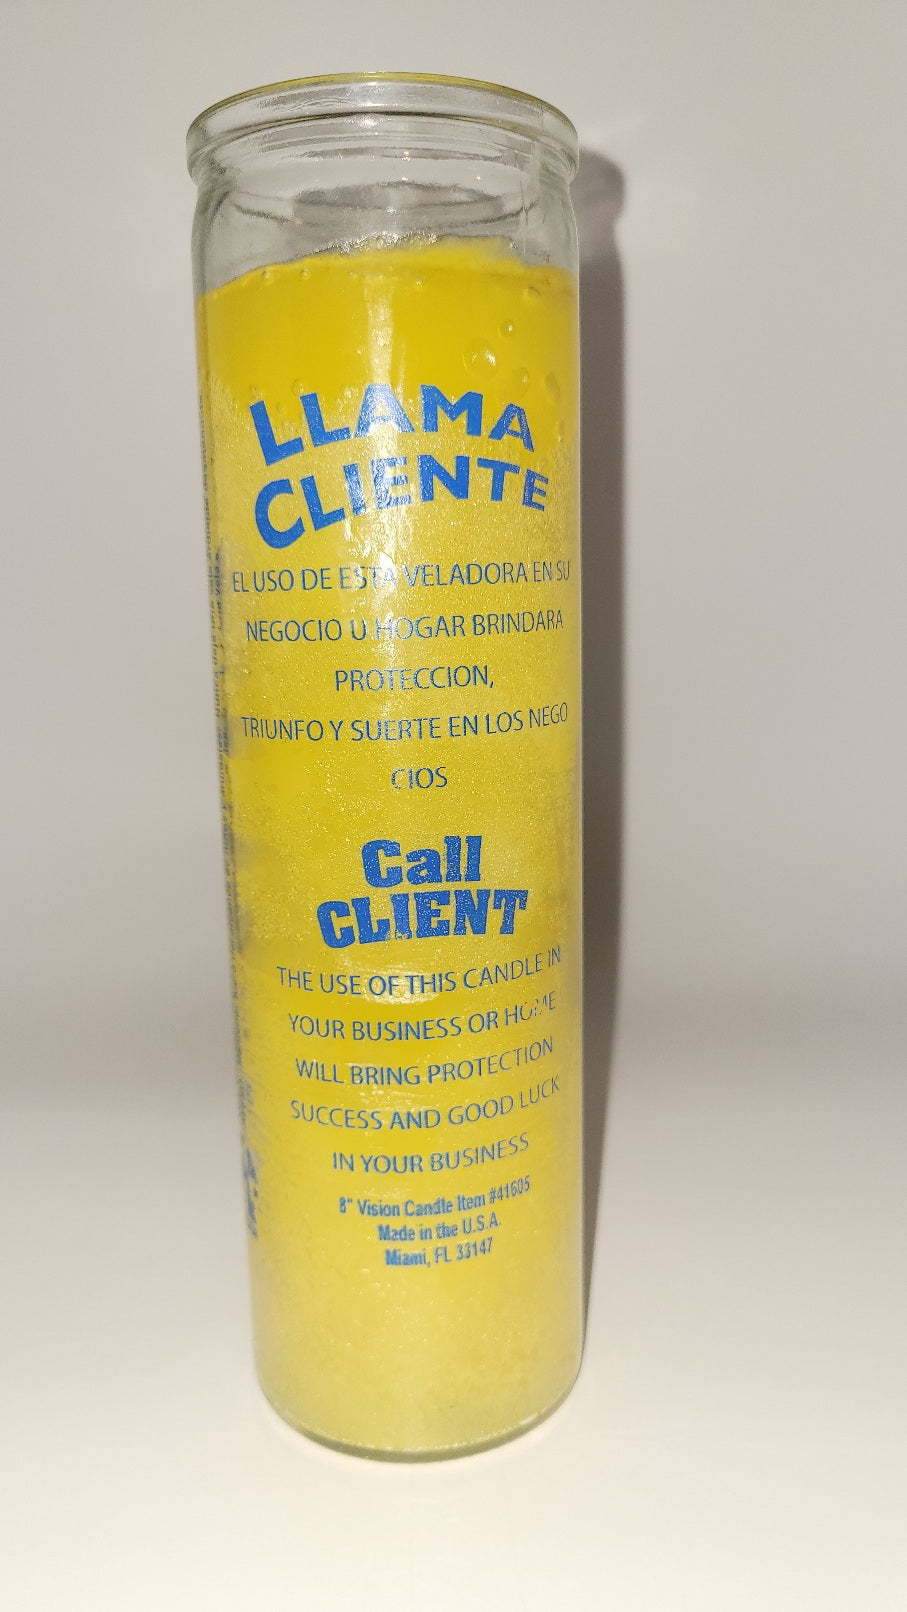 Llama Cliente Candle 